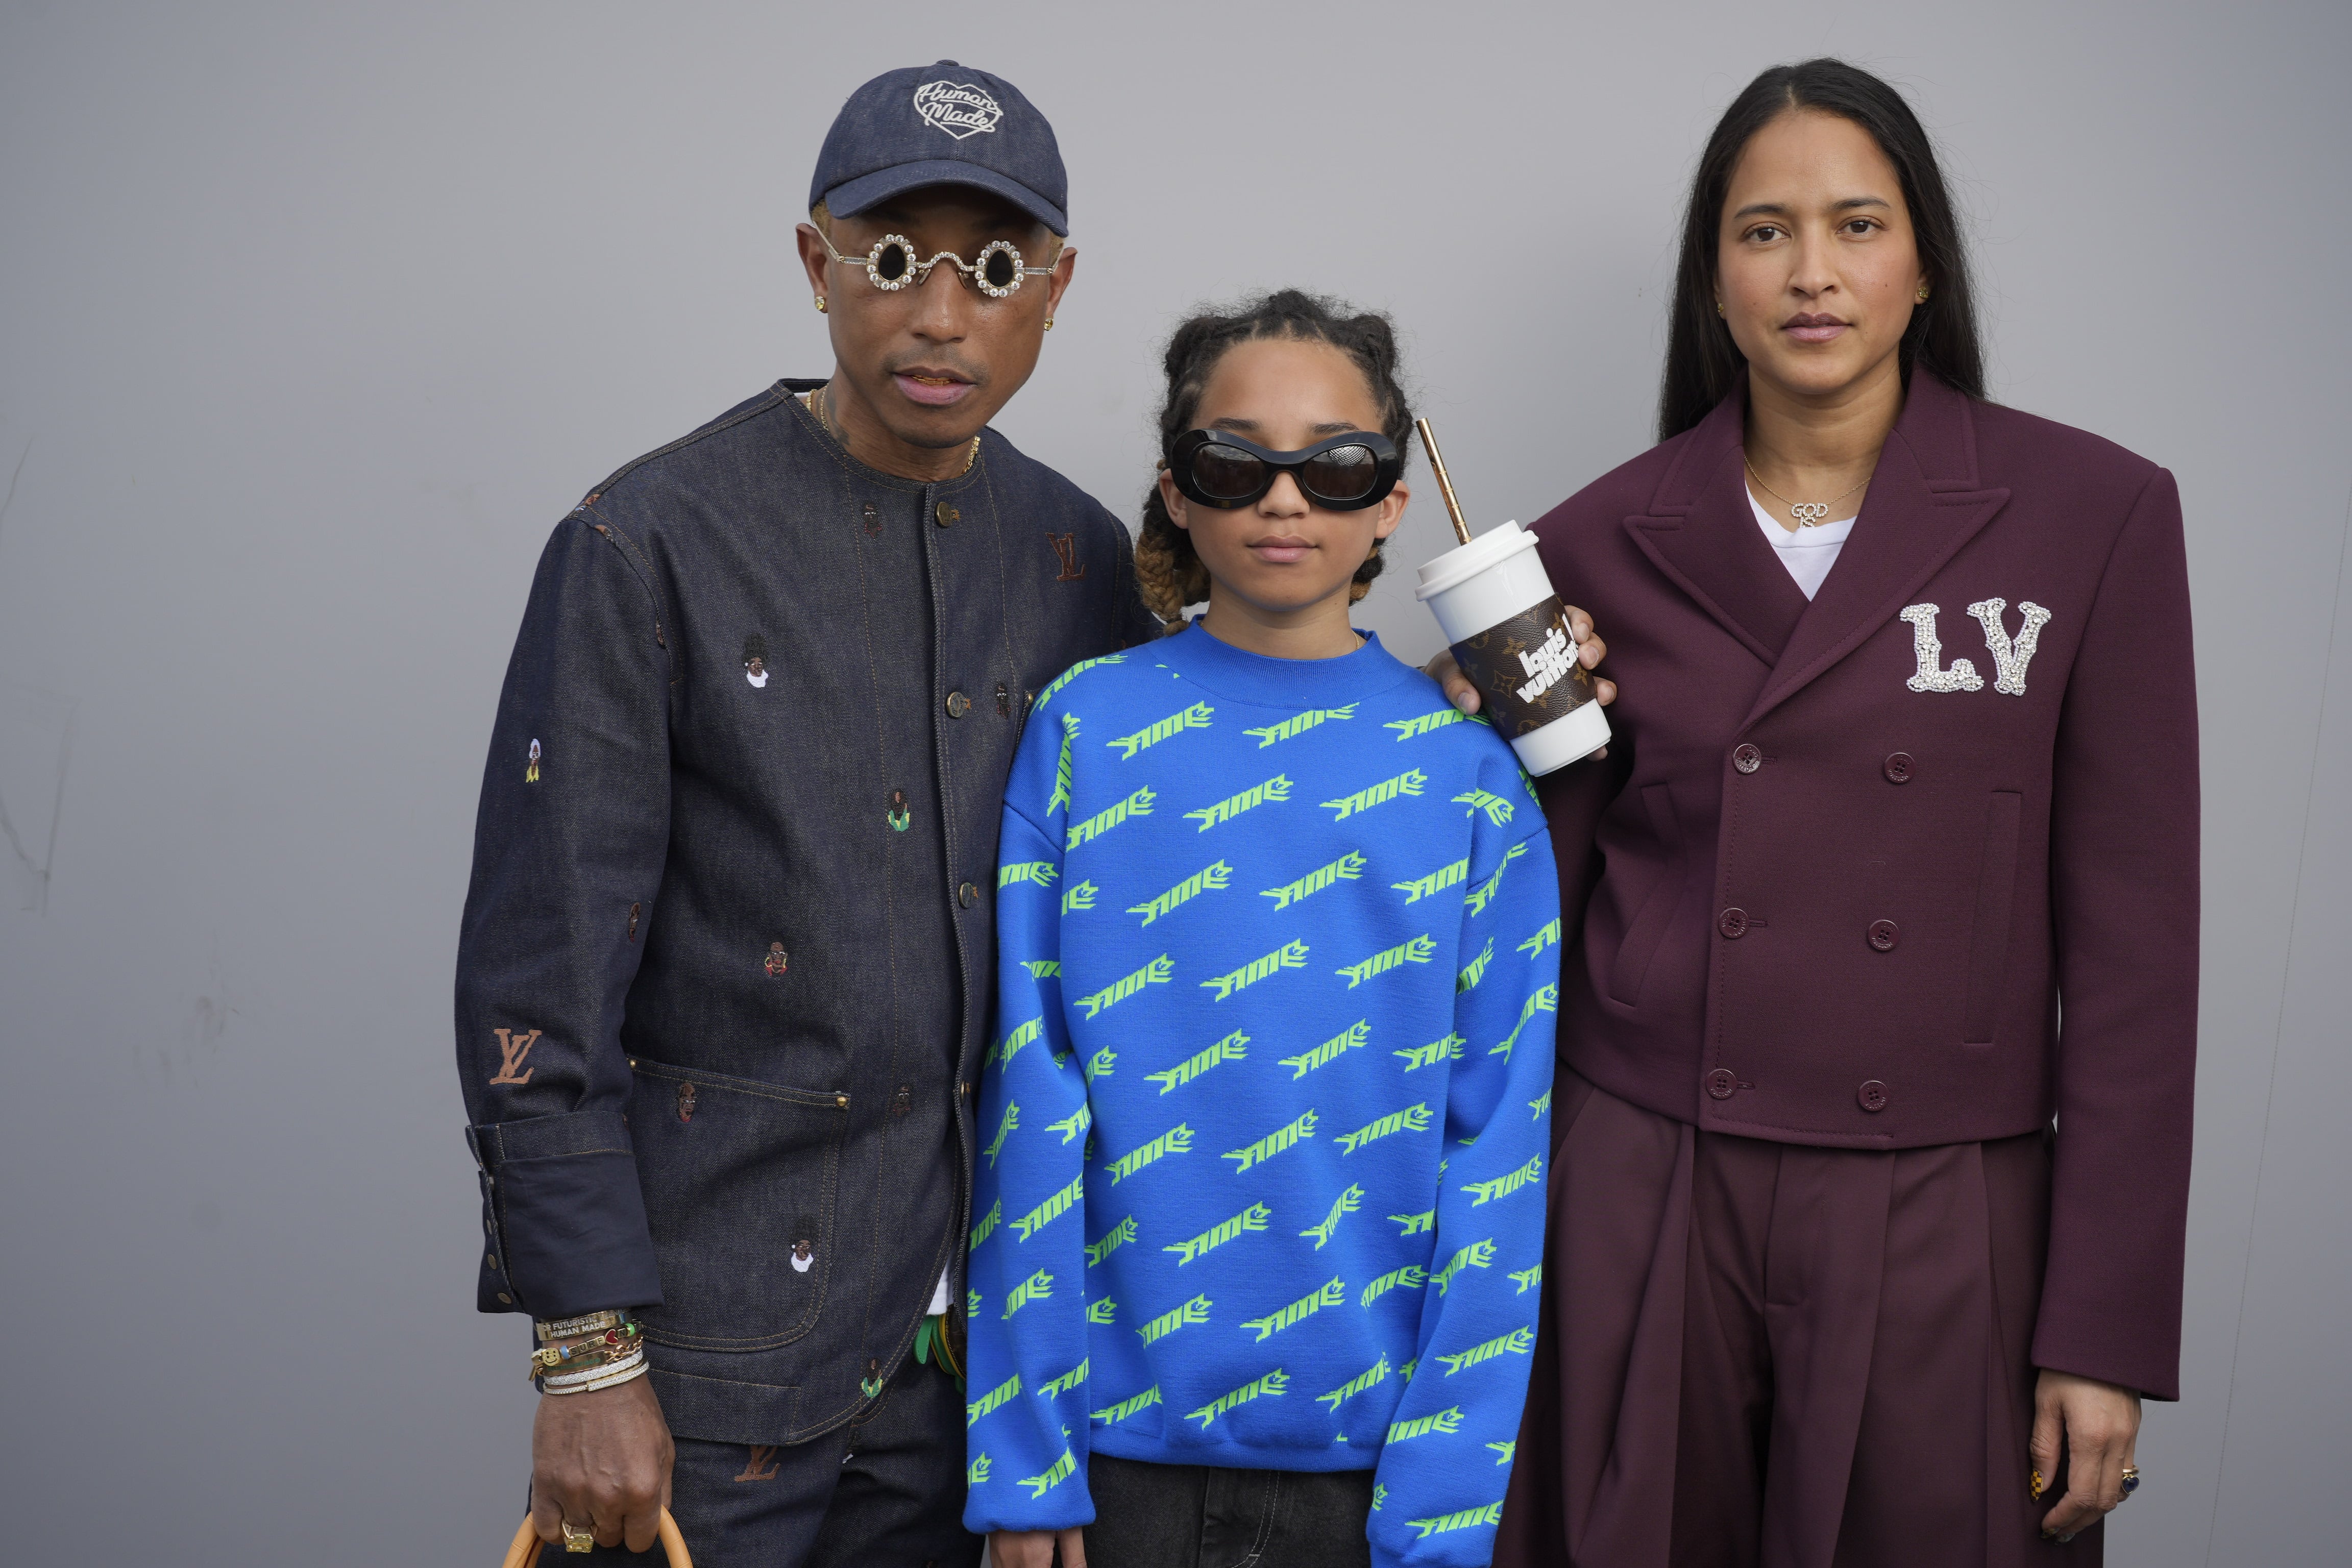 Pharrell Williams announces arrival of triplets